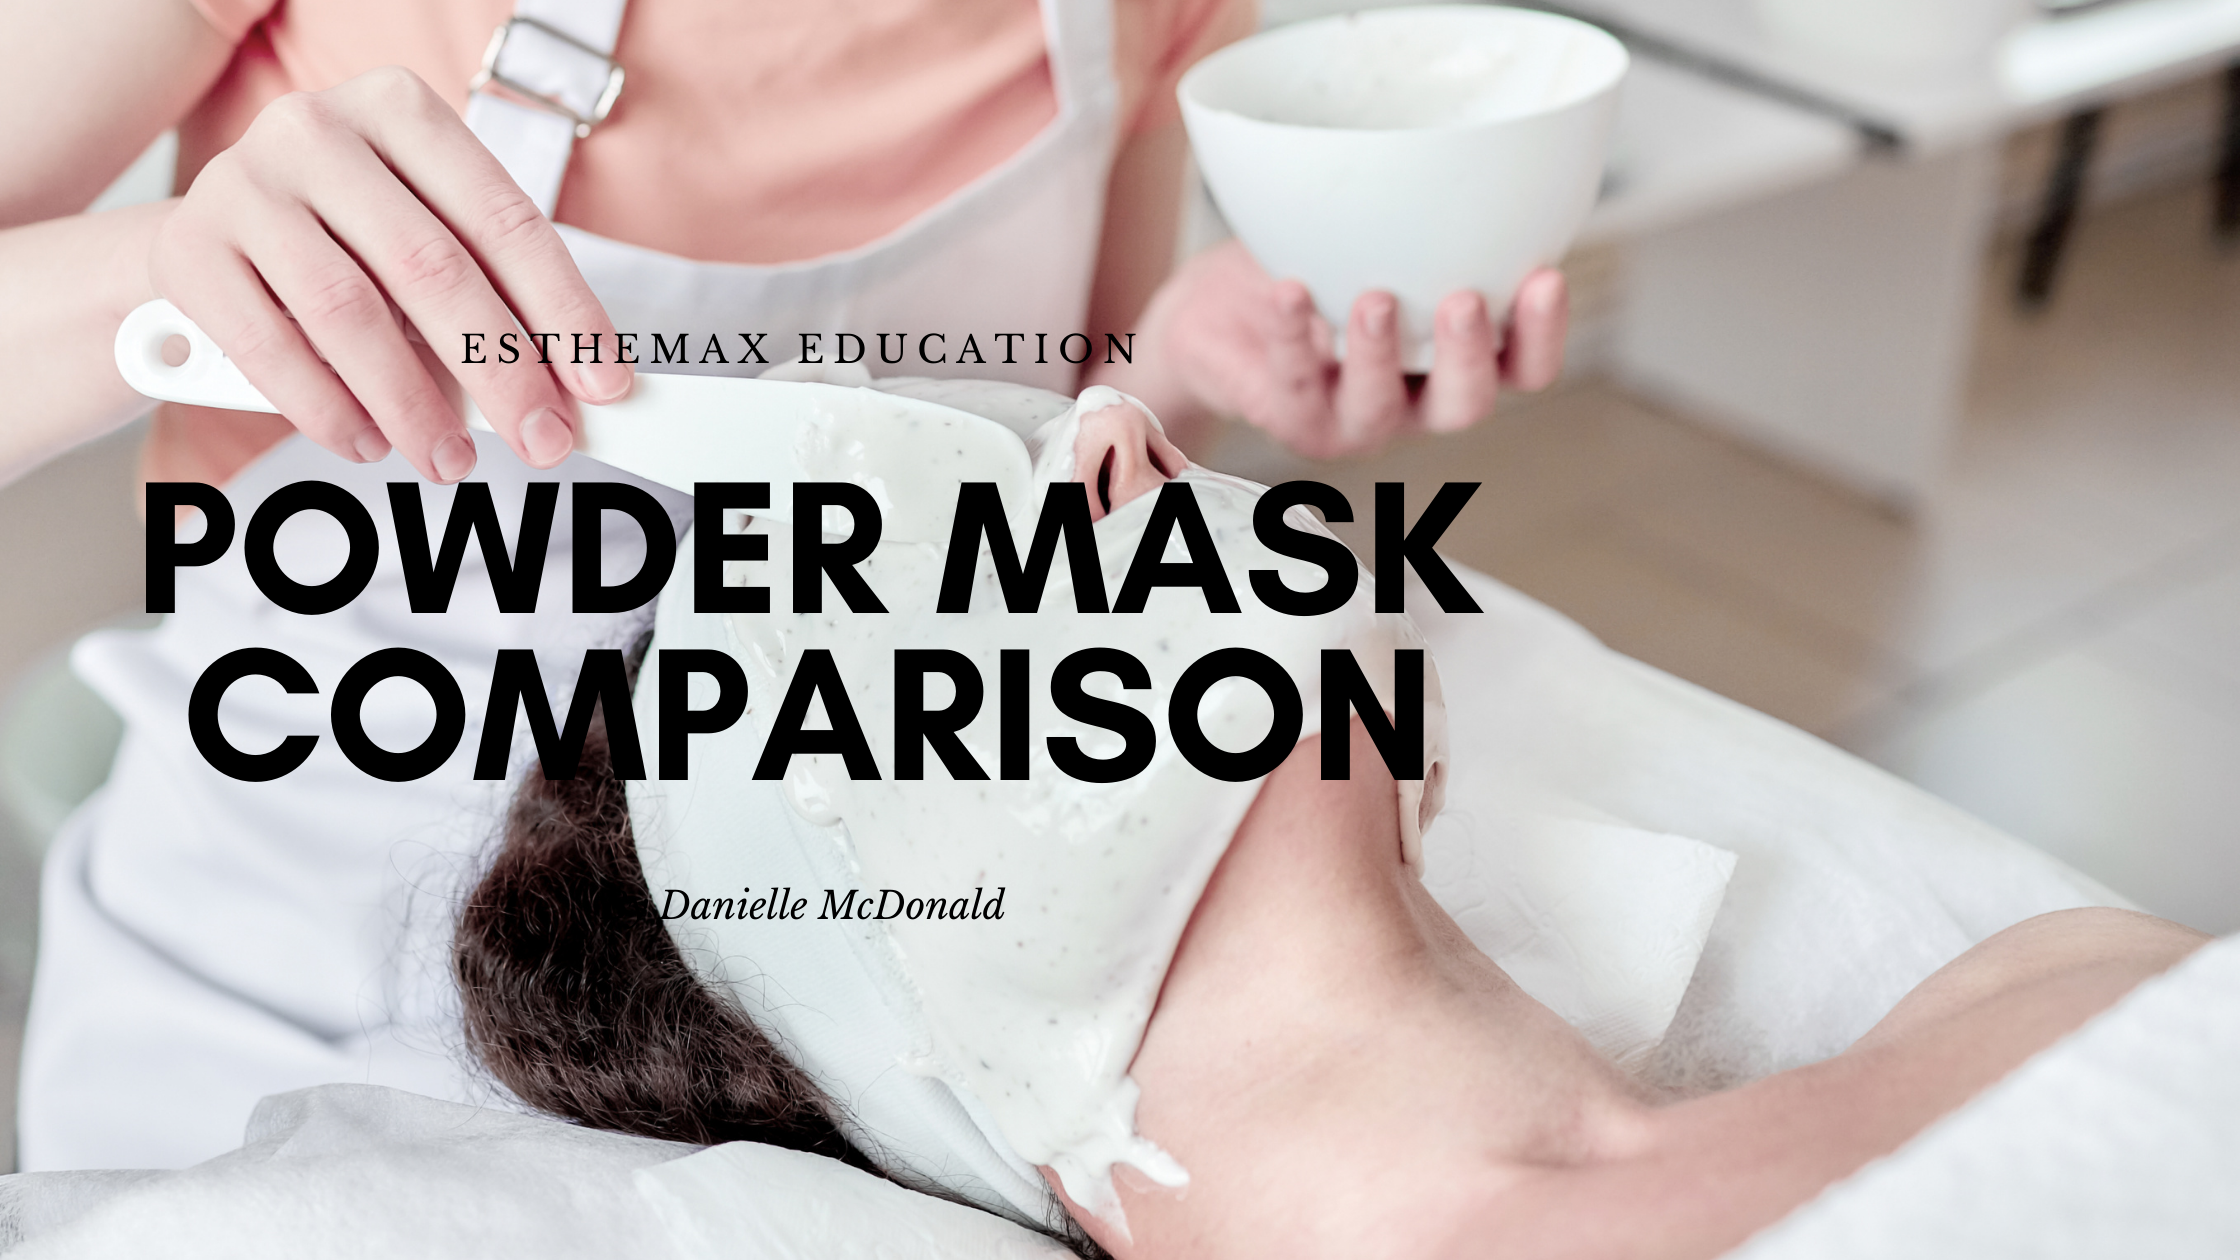 Esthemax Powder Masks Comparison